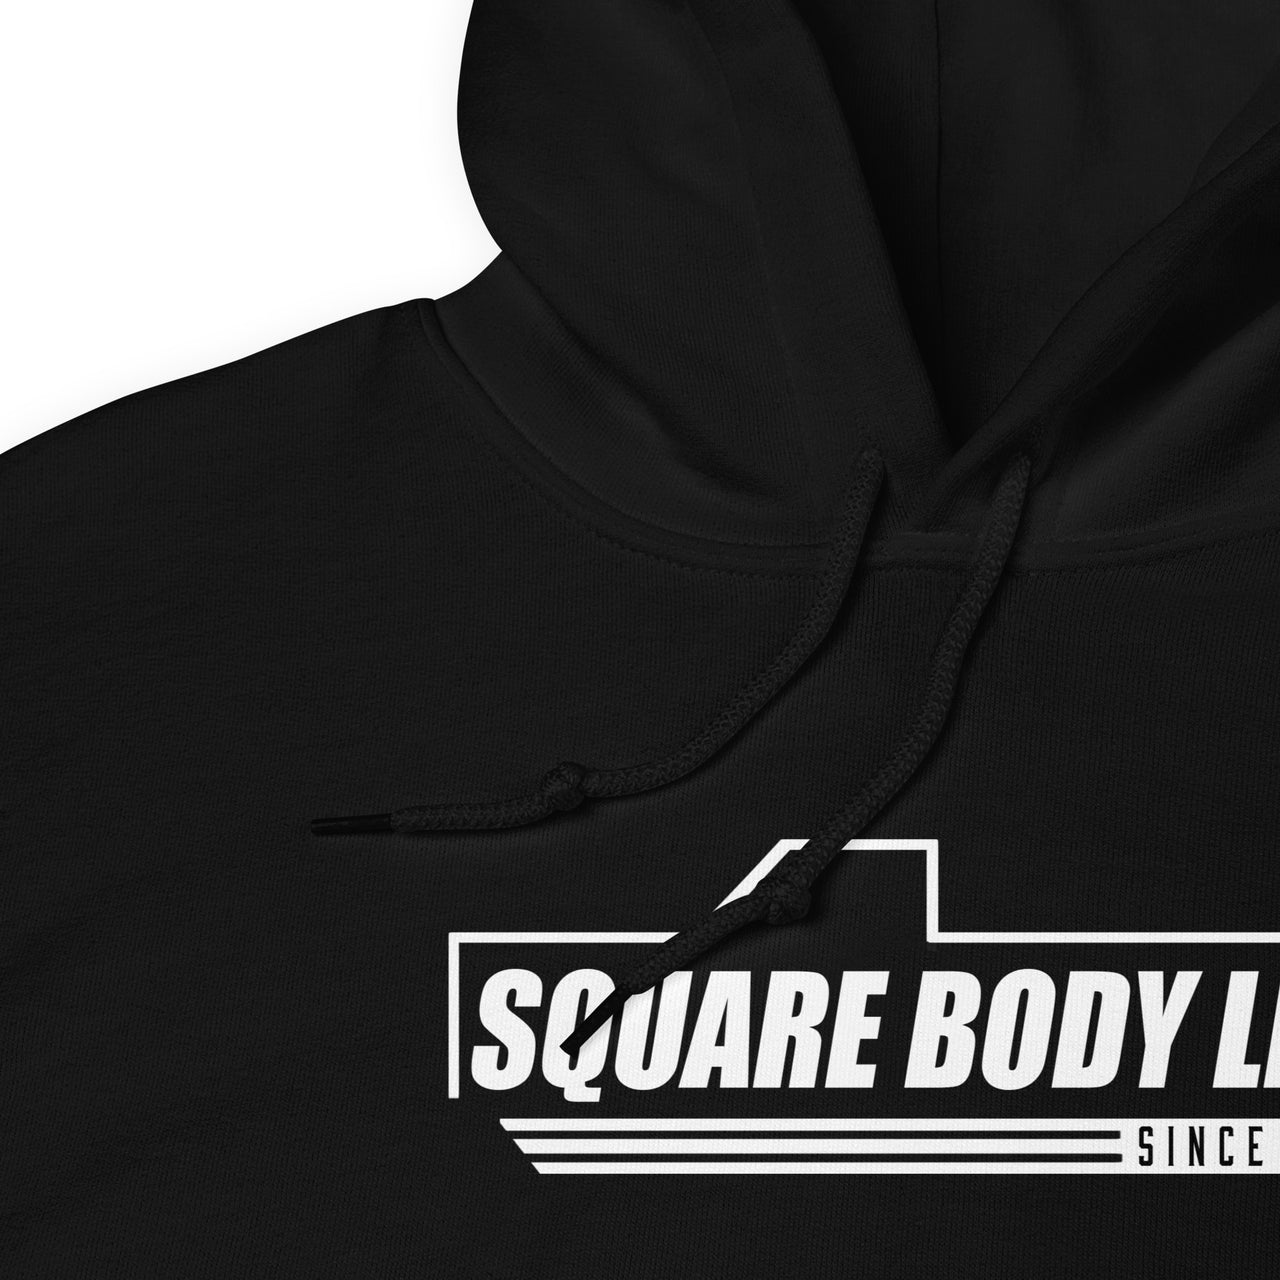 Square Body Life Hoodie Squarebody Truck Sweatshirt in black close up